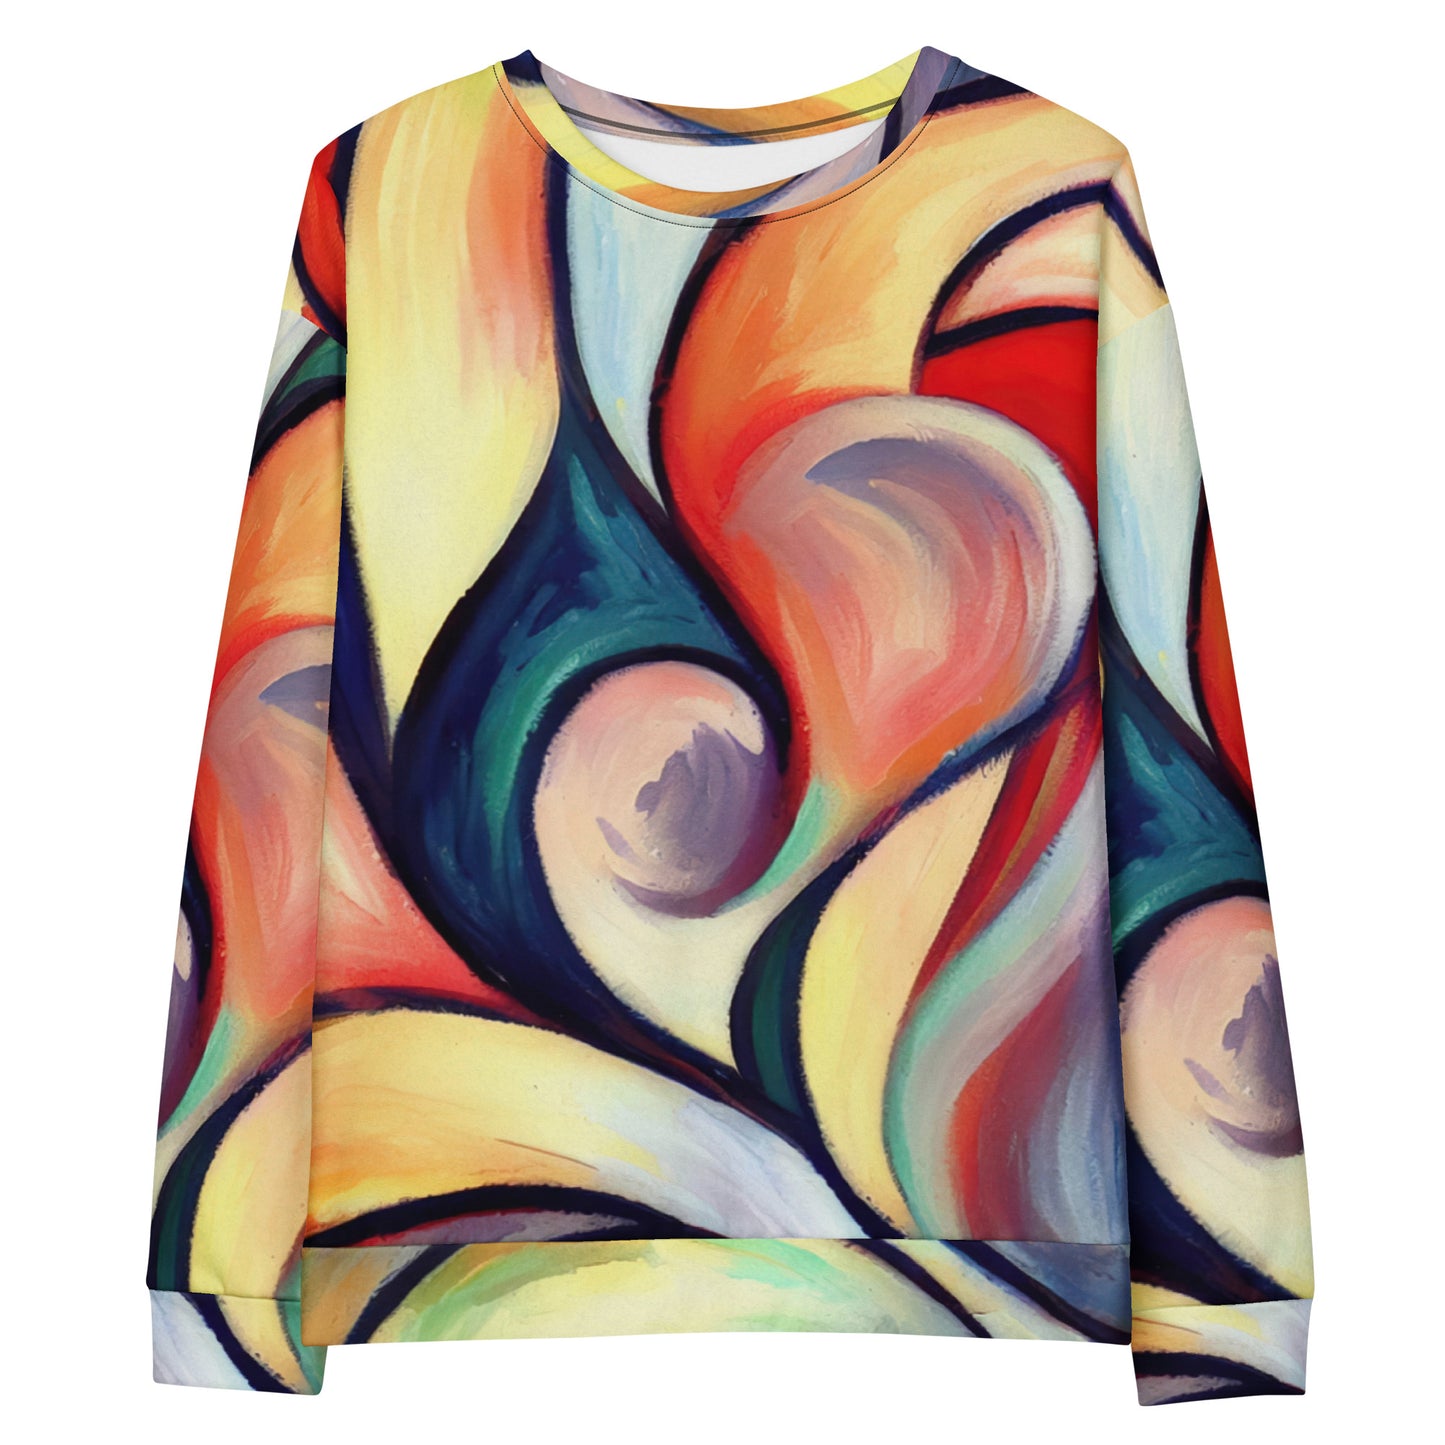 DMV 0277 Abstract Art Unisex Sweatshirt